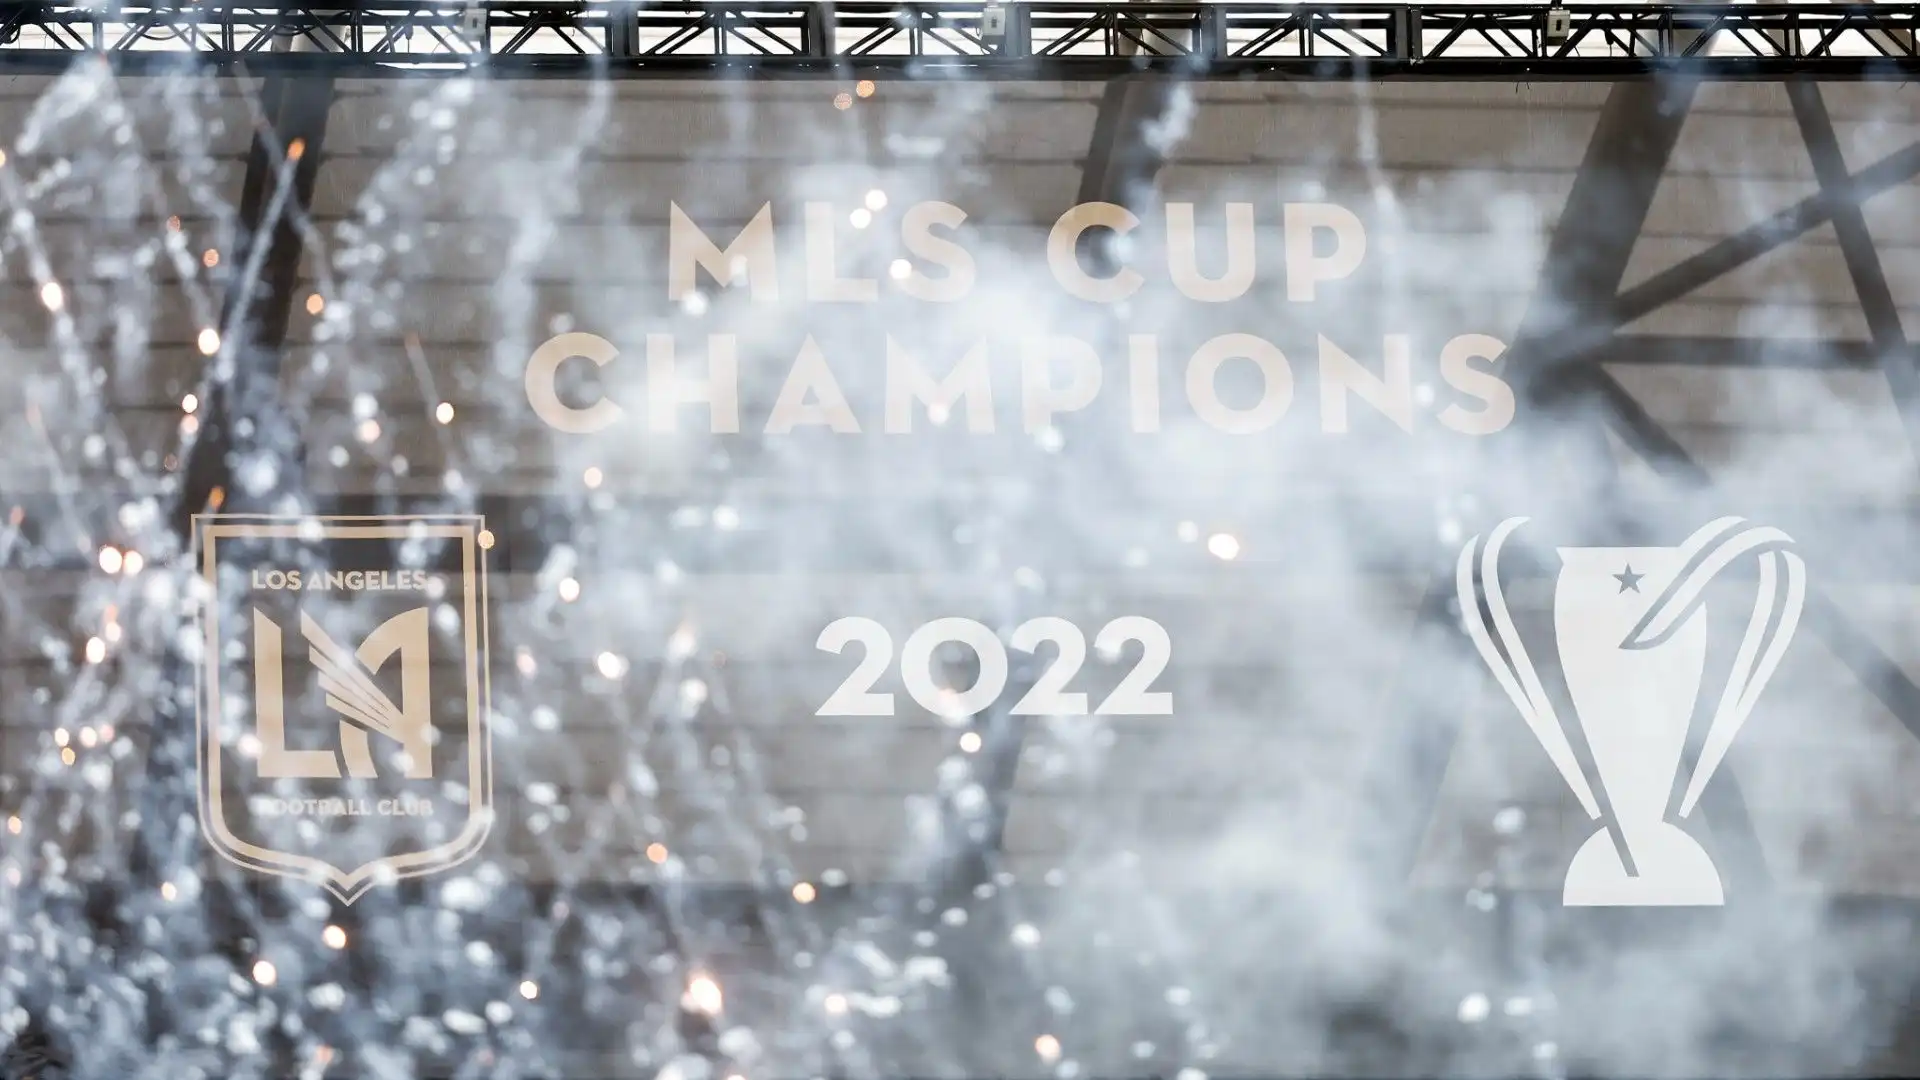 Nel 2022 la squadra ha vinto la MLS Cup